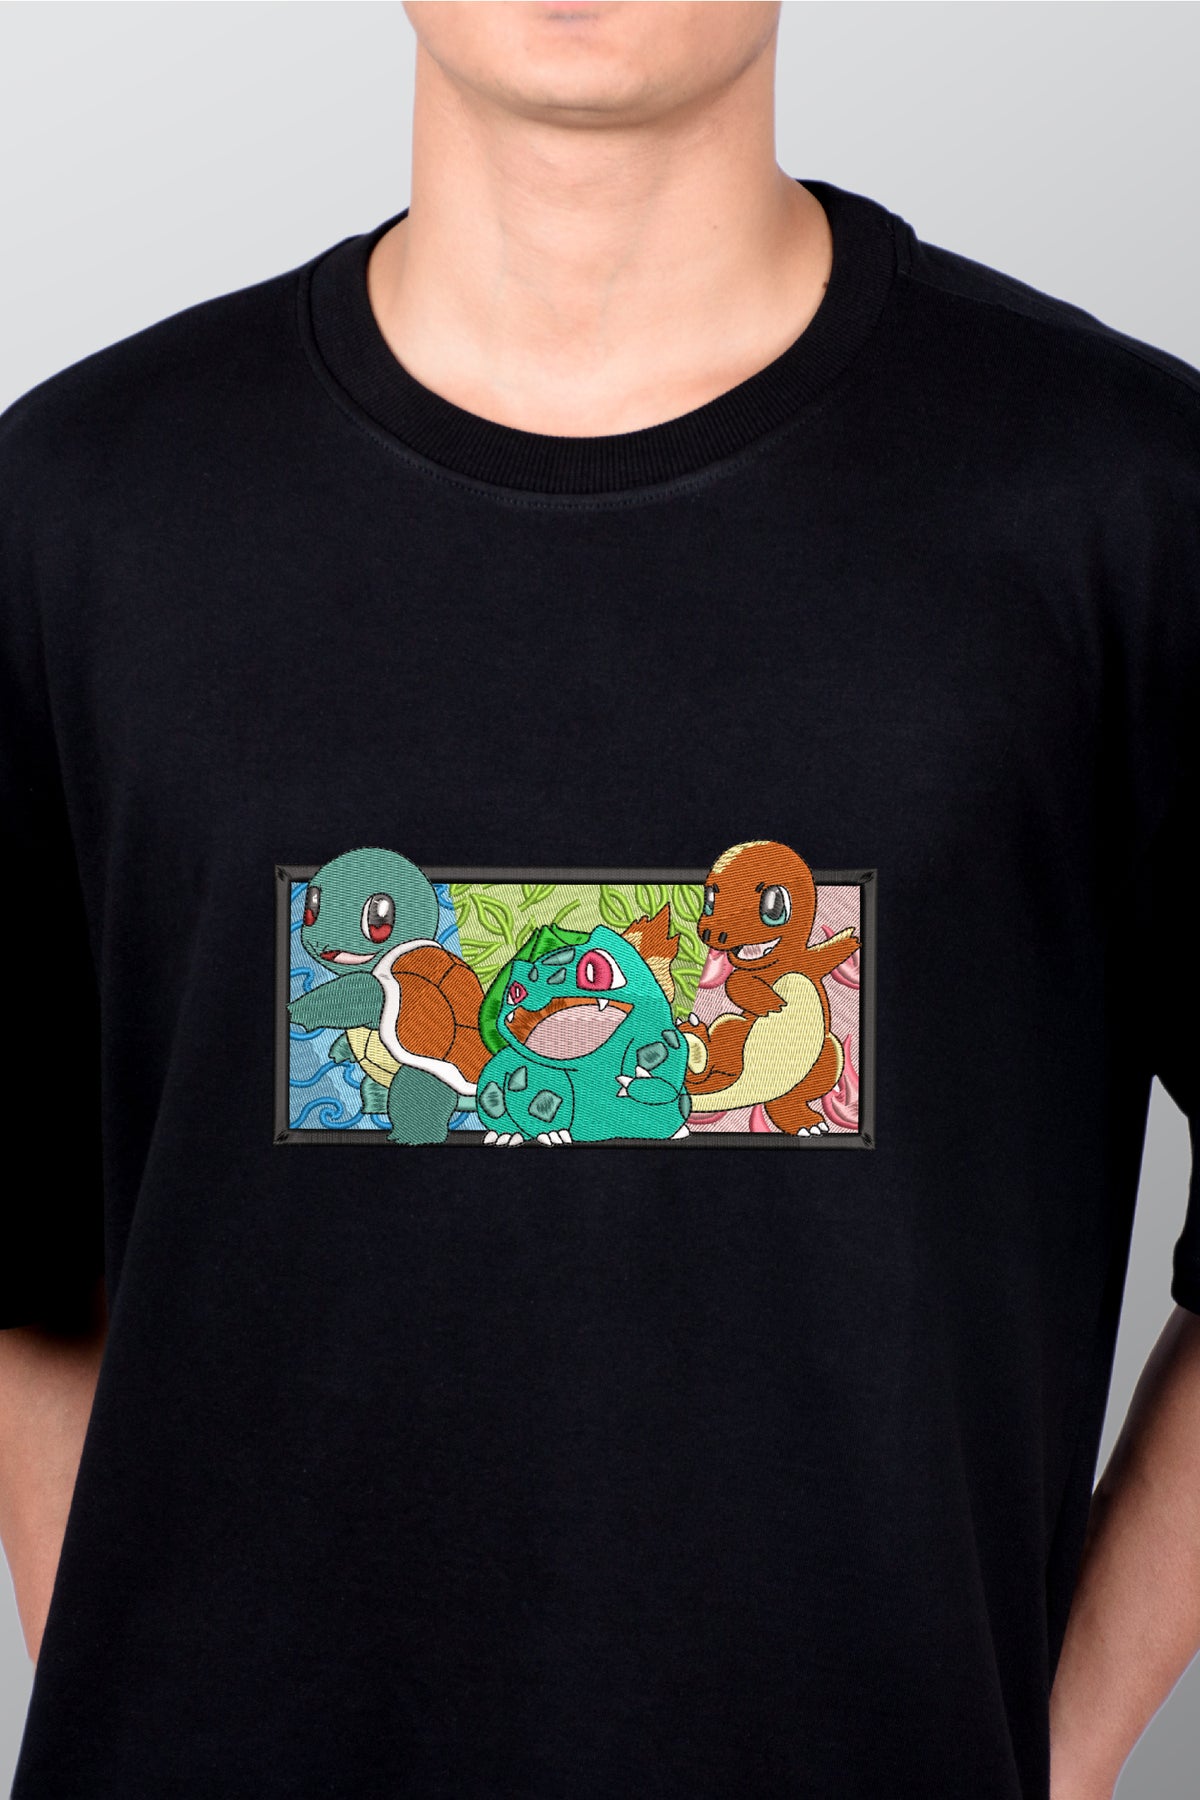 Balbasaur Charmendar Squirtel Embroidered T-shirt